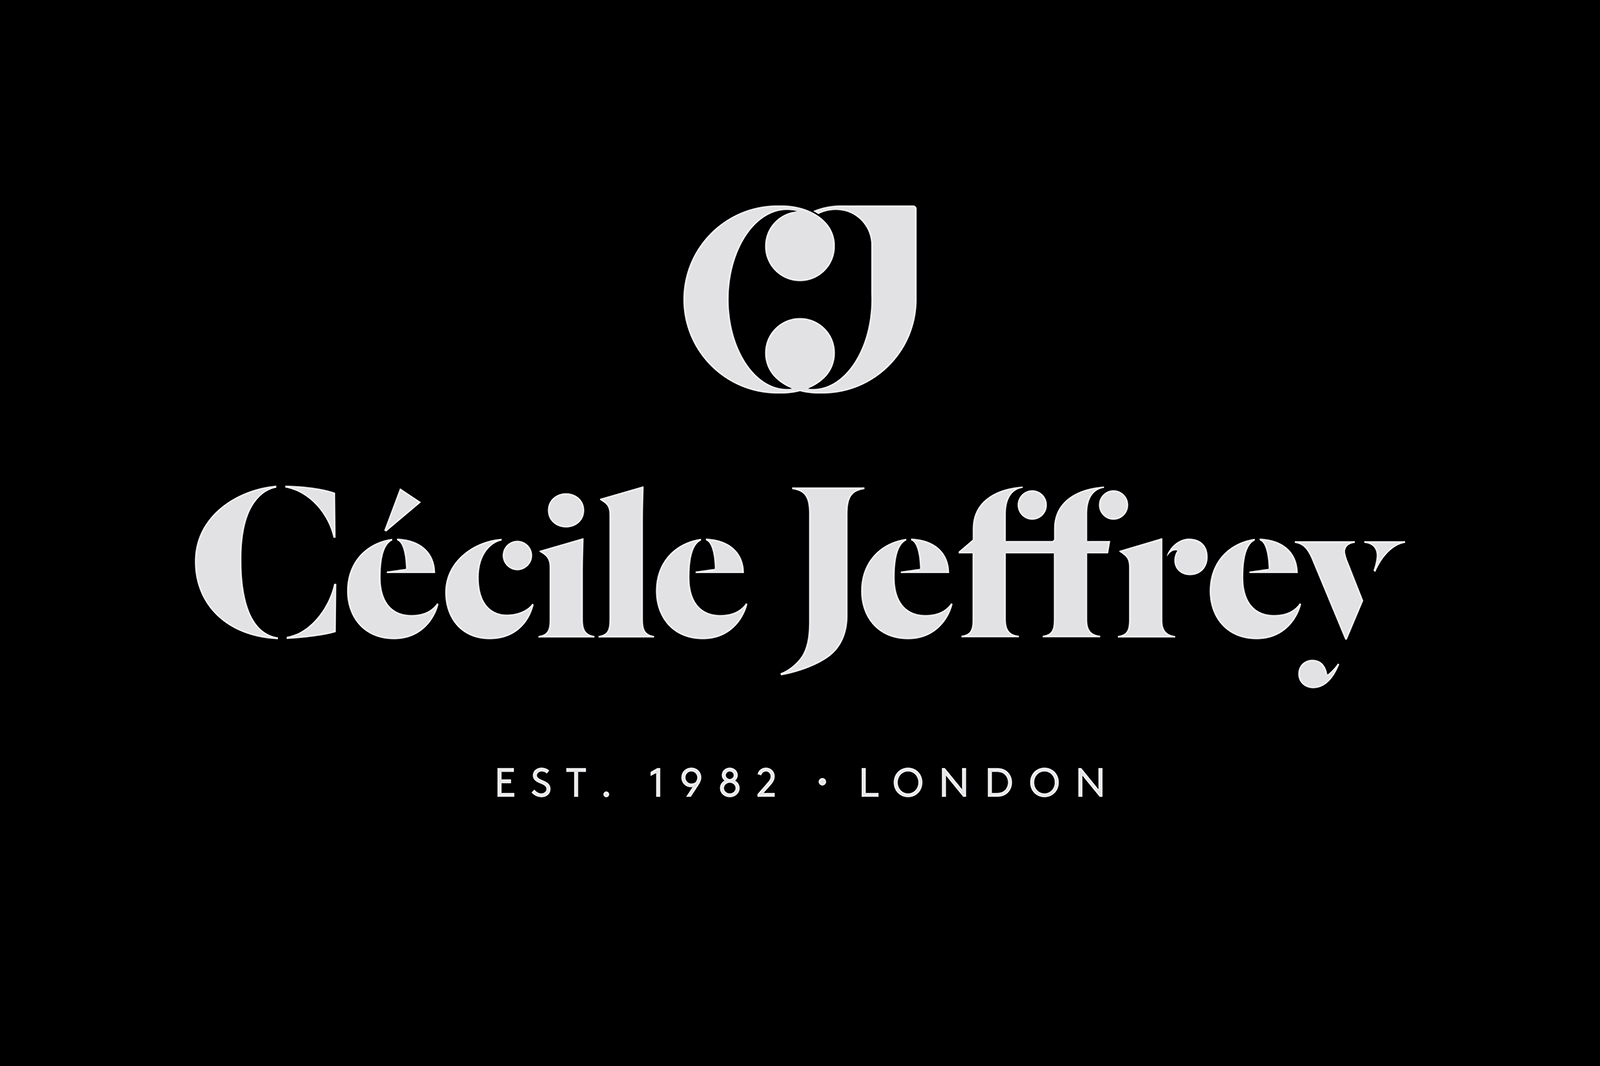 Cecile Jeffrey Brand Identity | Trebleseven.com